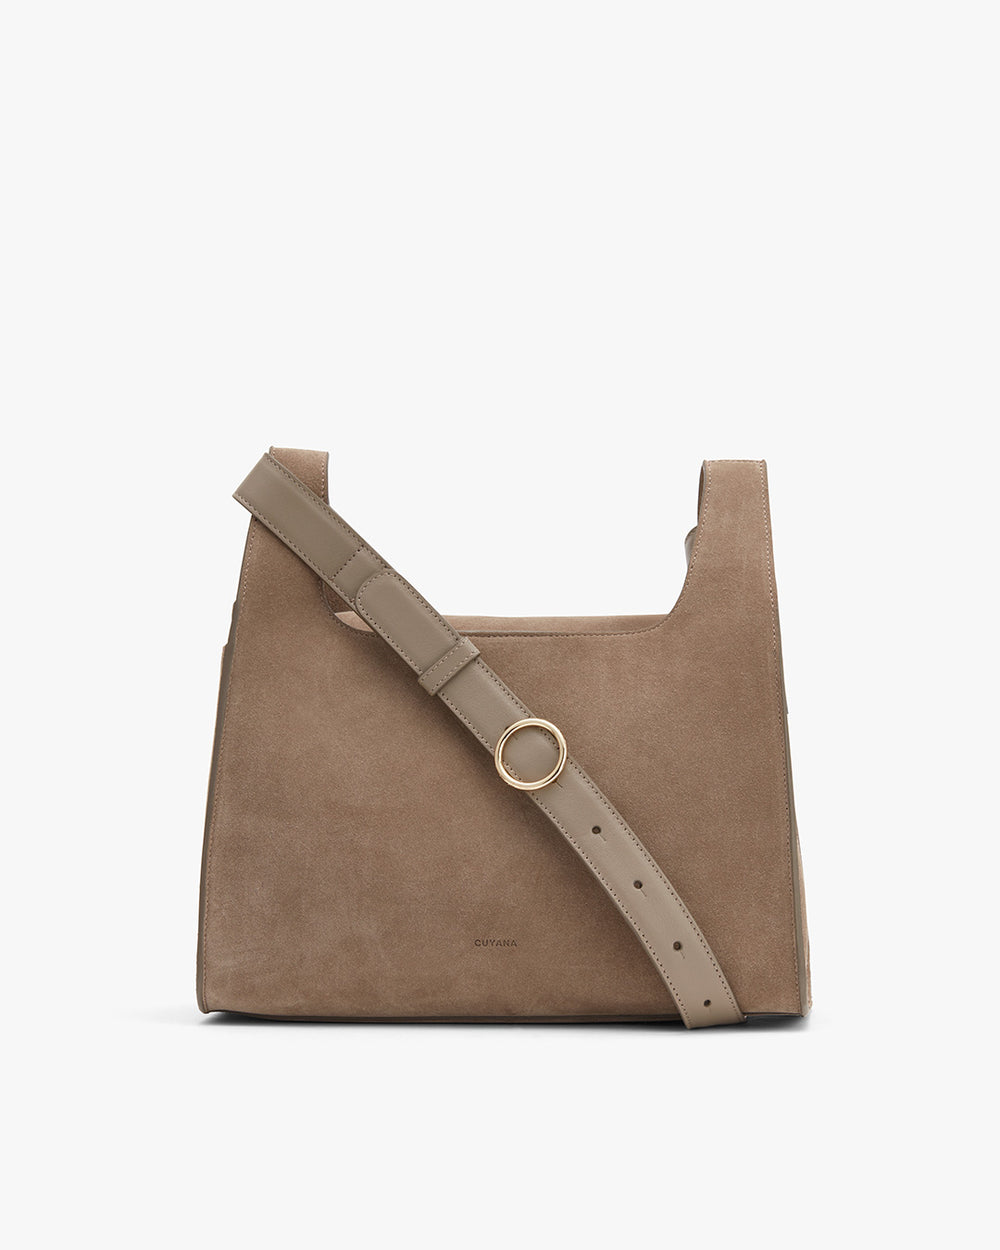 Suede shoulder bag with adjustable strap and metal ring detail.